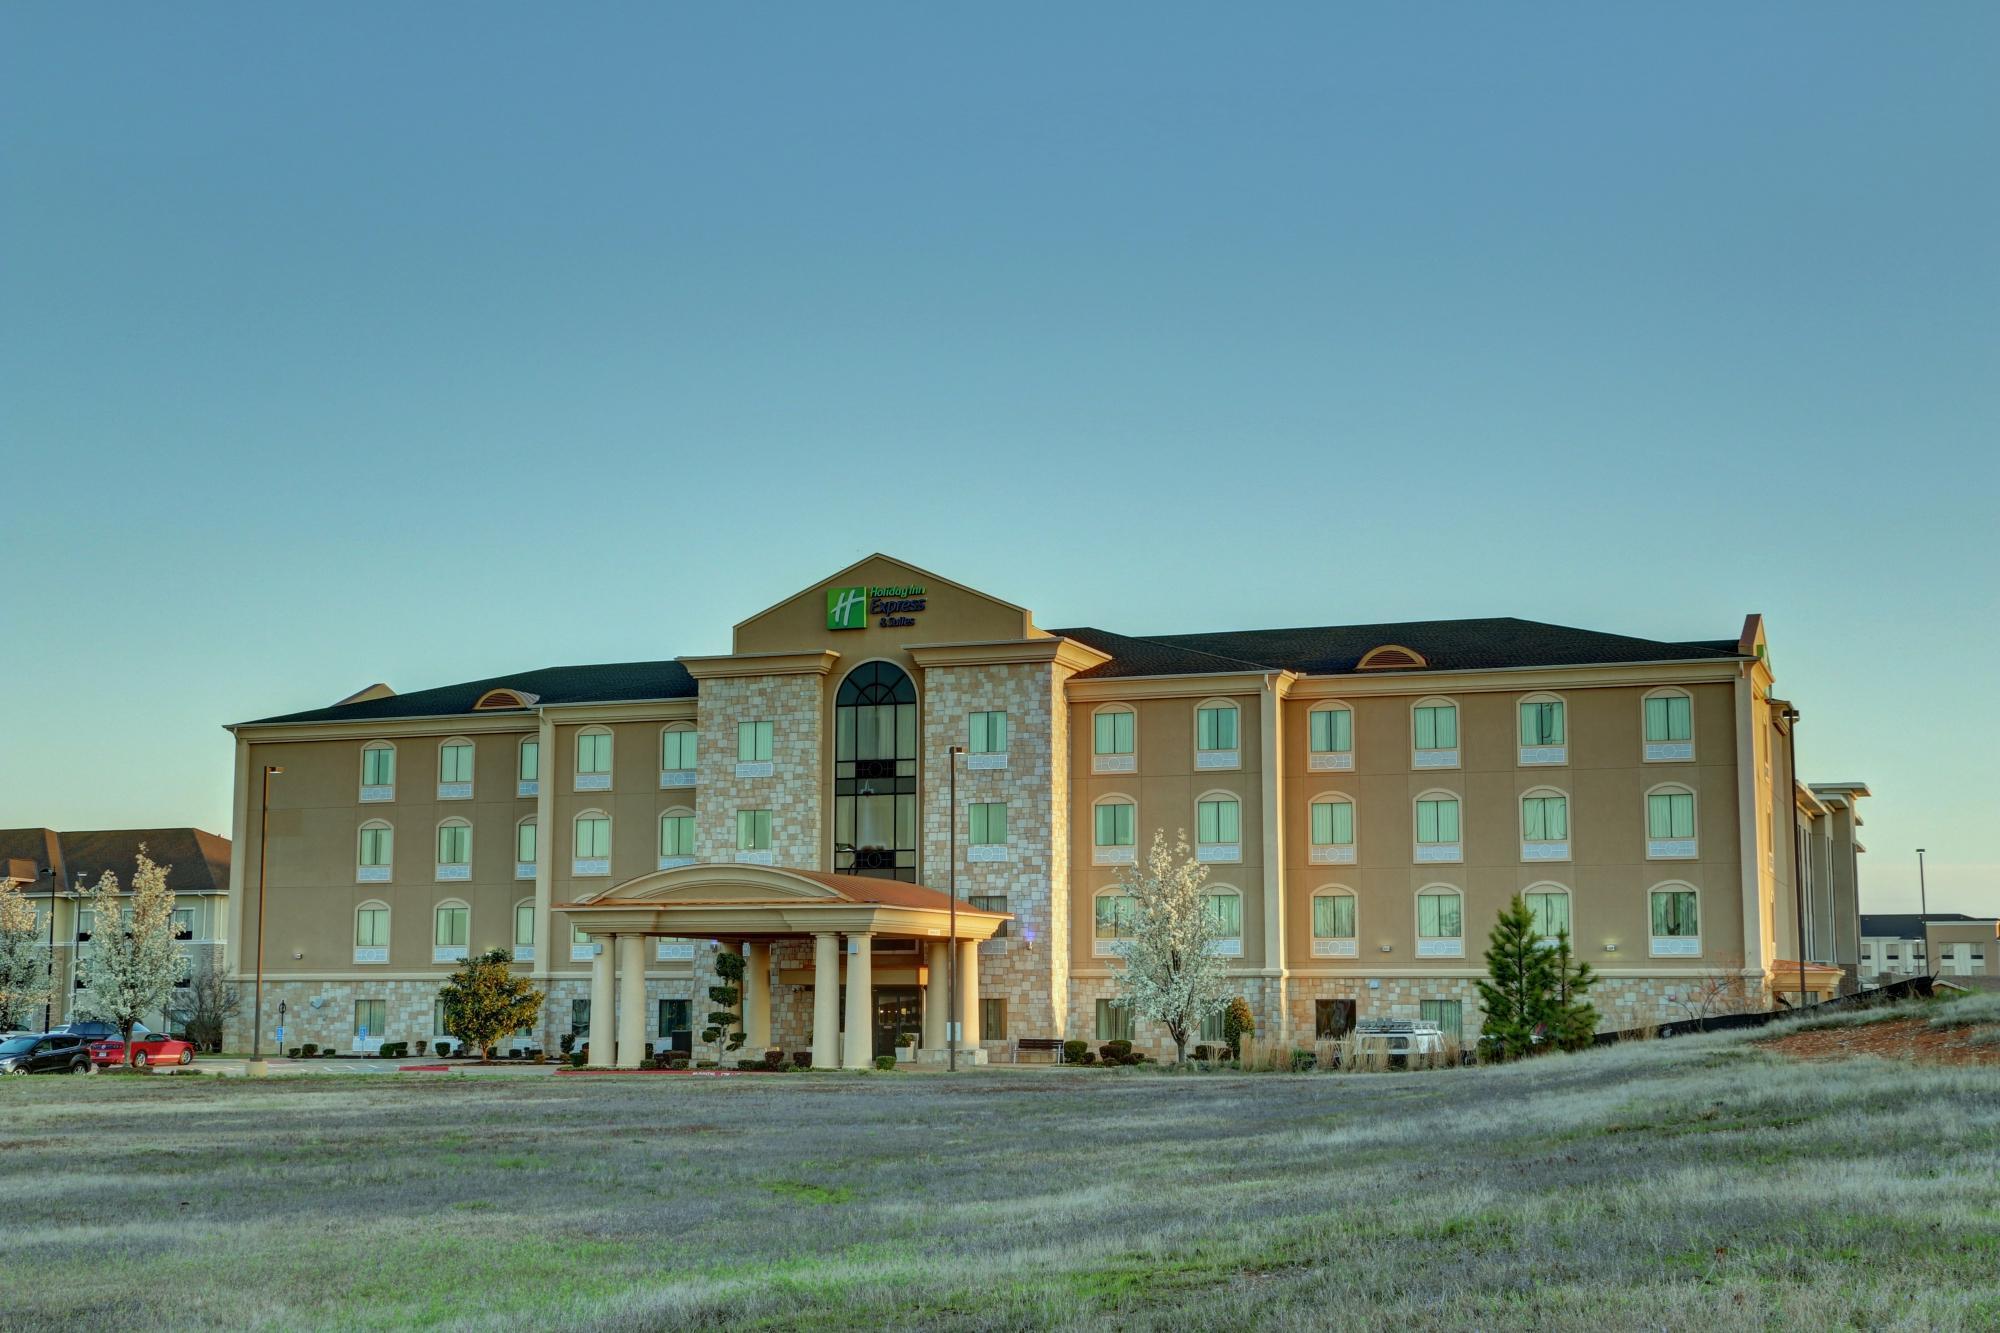 Photo of Holiday Inn Express & Suites Texarkana East, Texarkana, AR